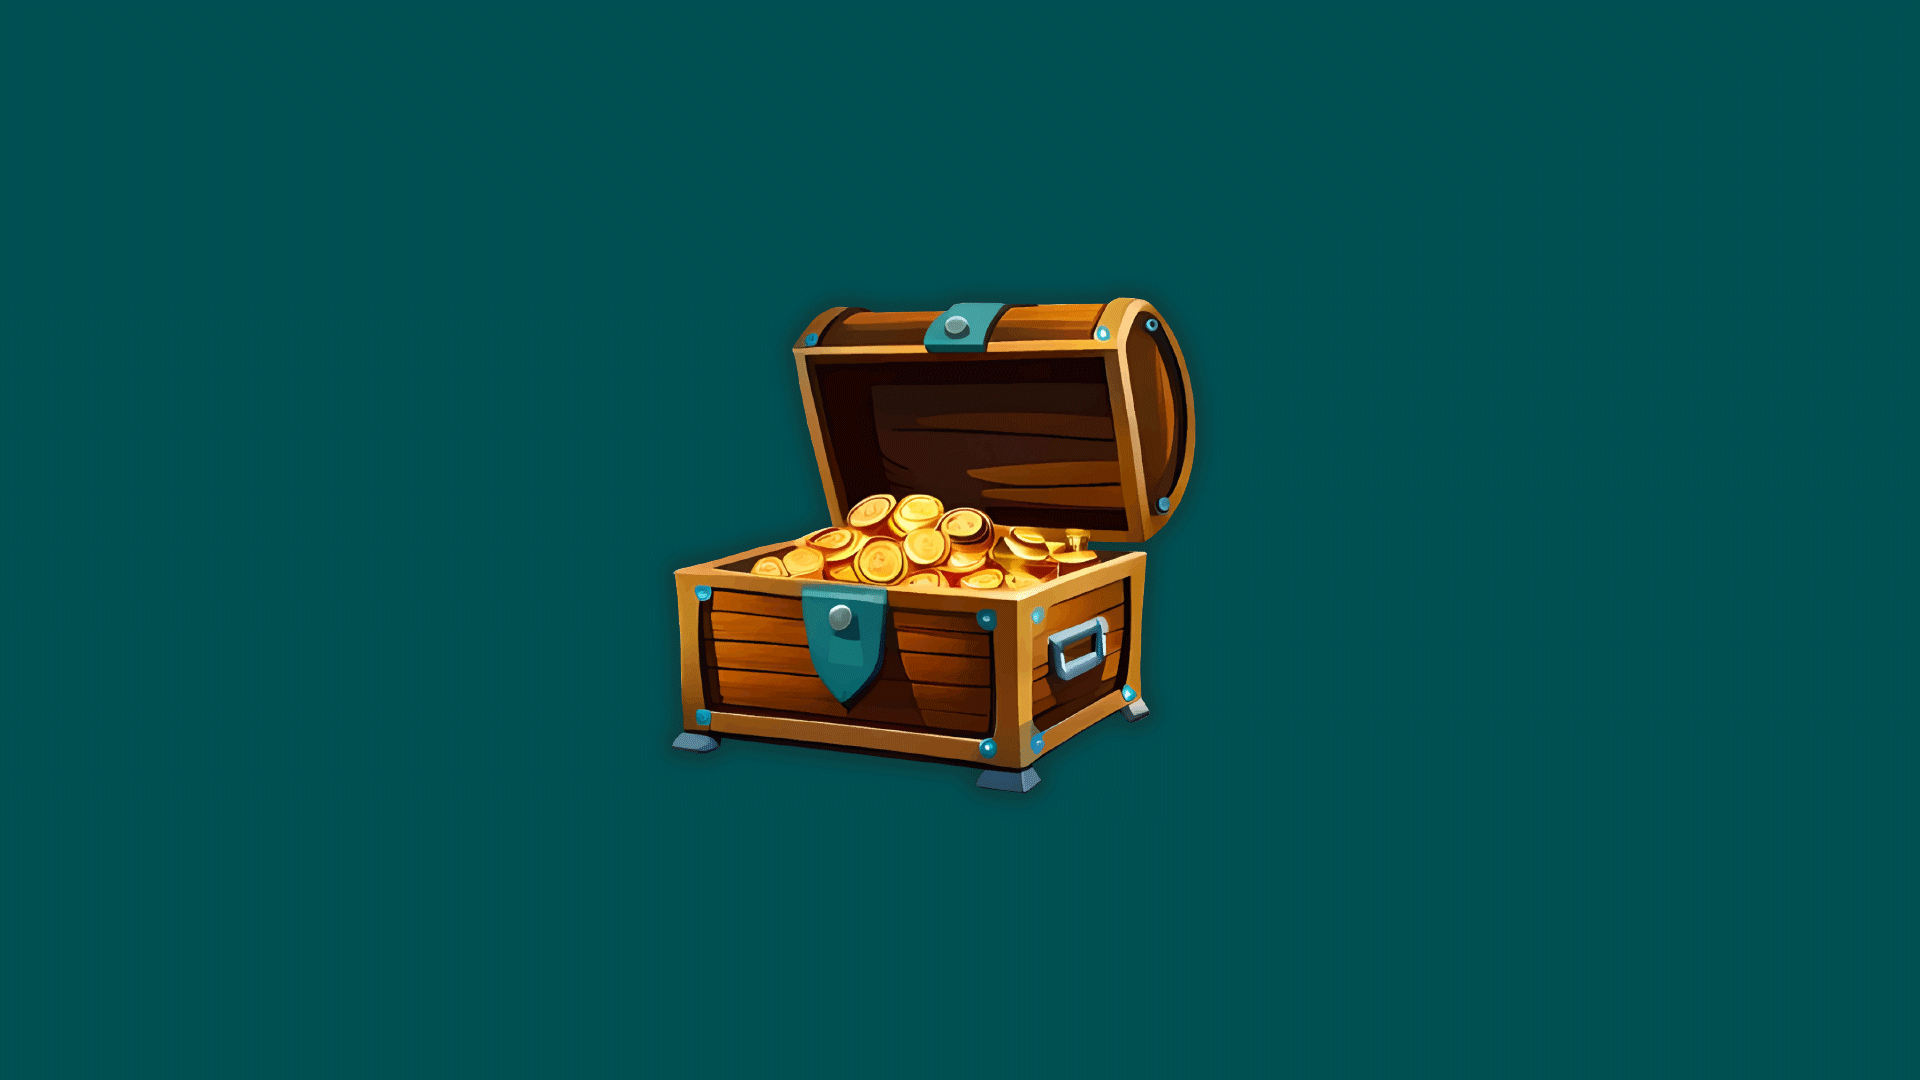 Illustration of a treasure chest